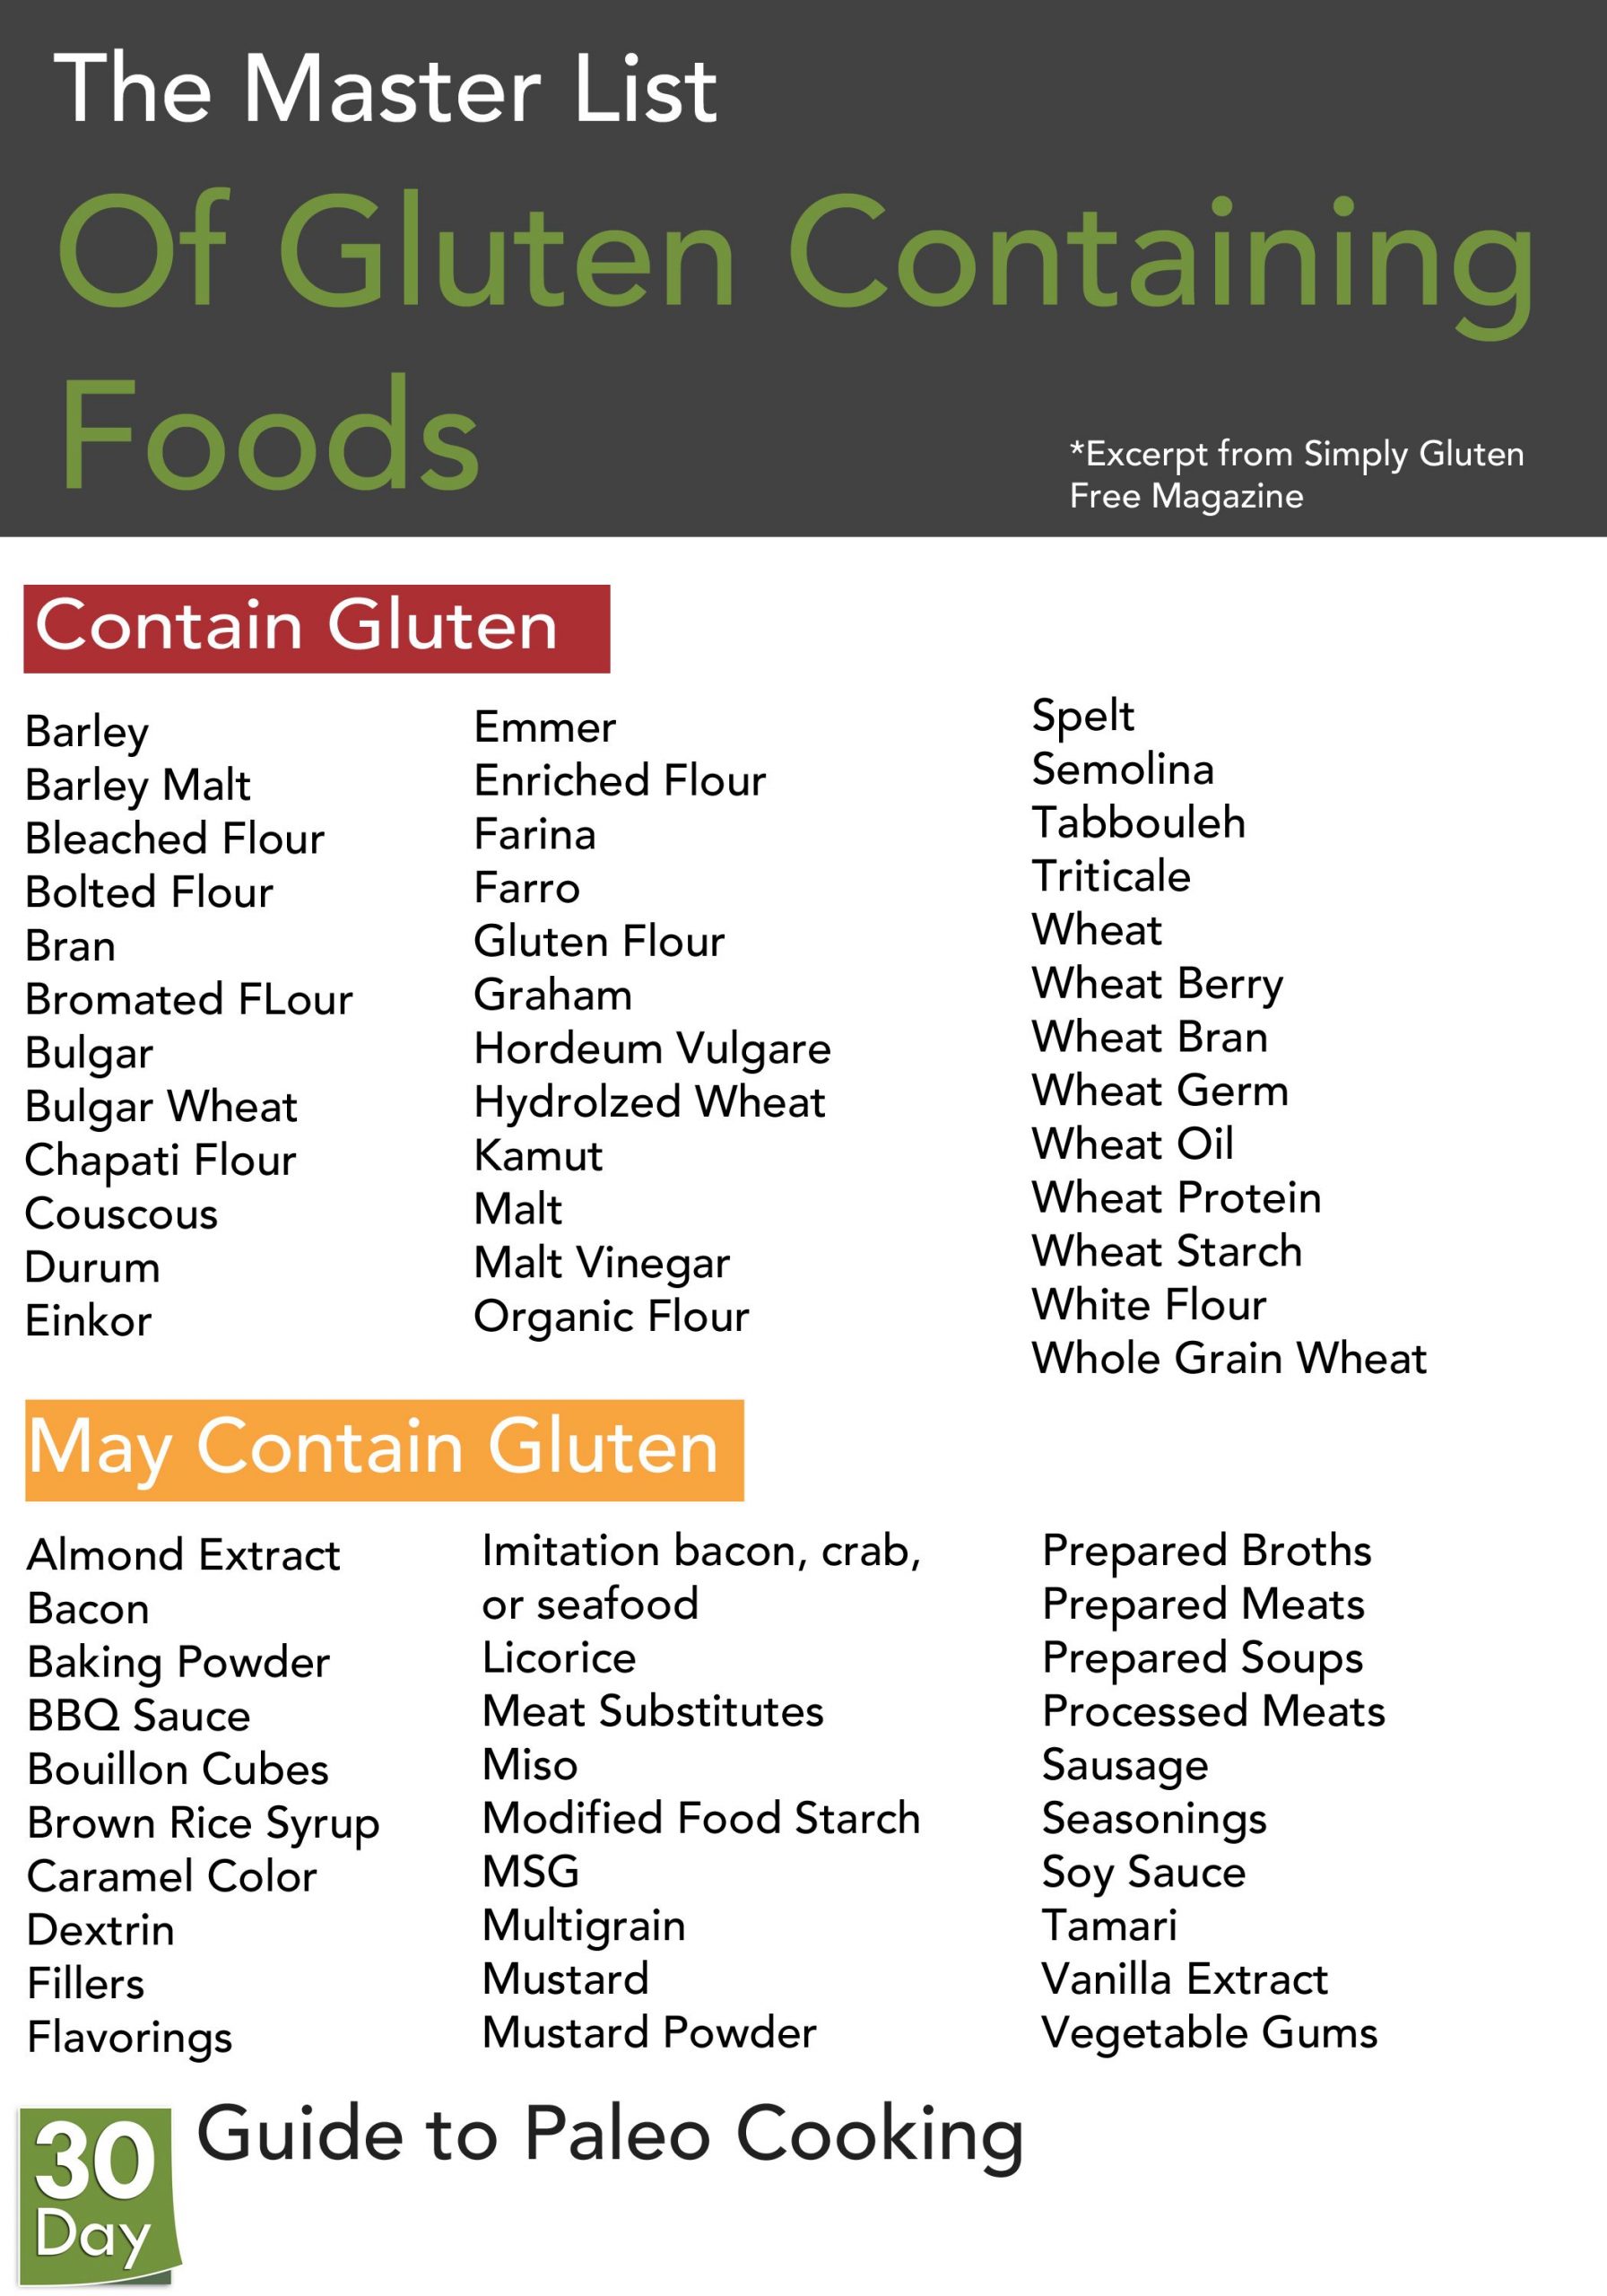 The master list of gluten